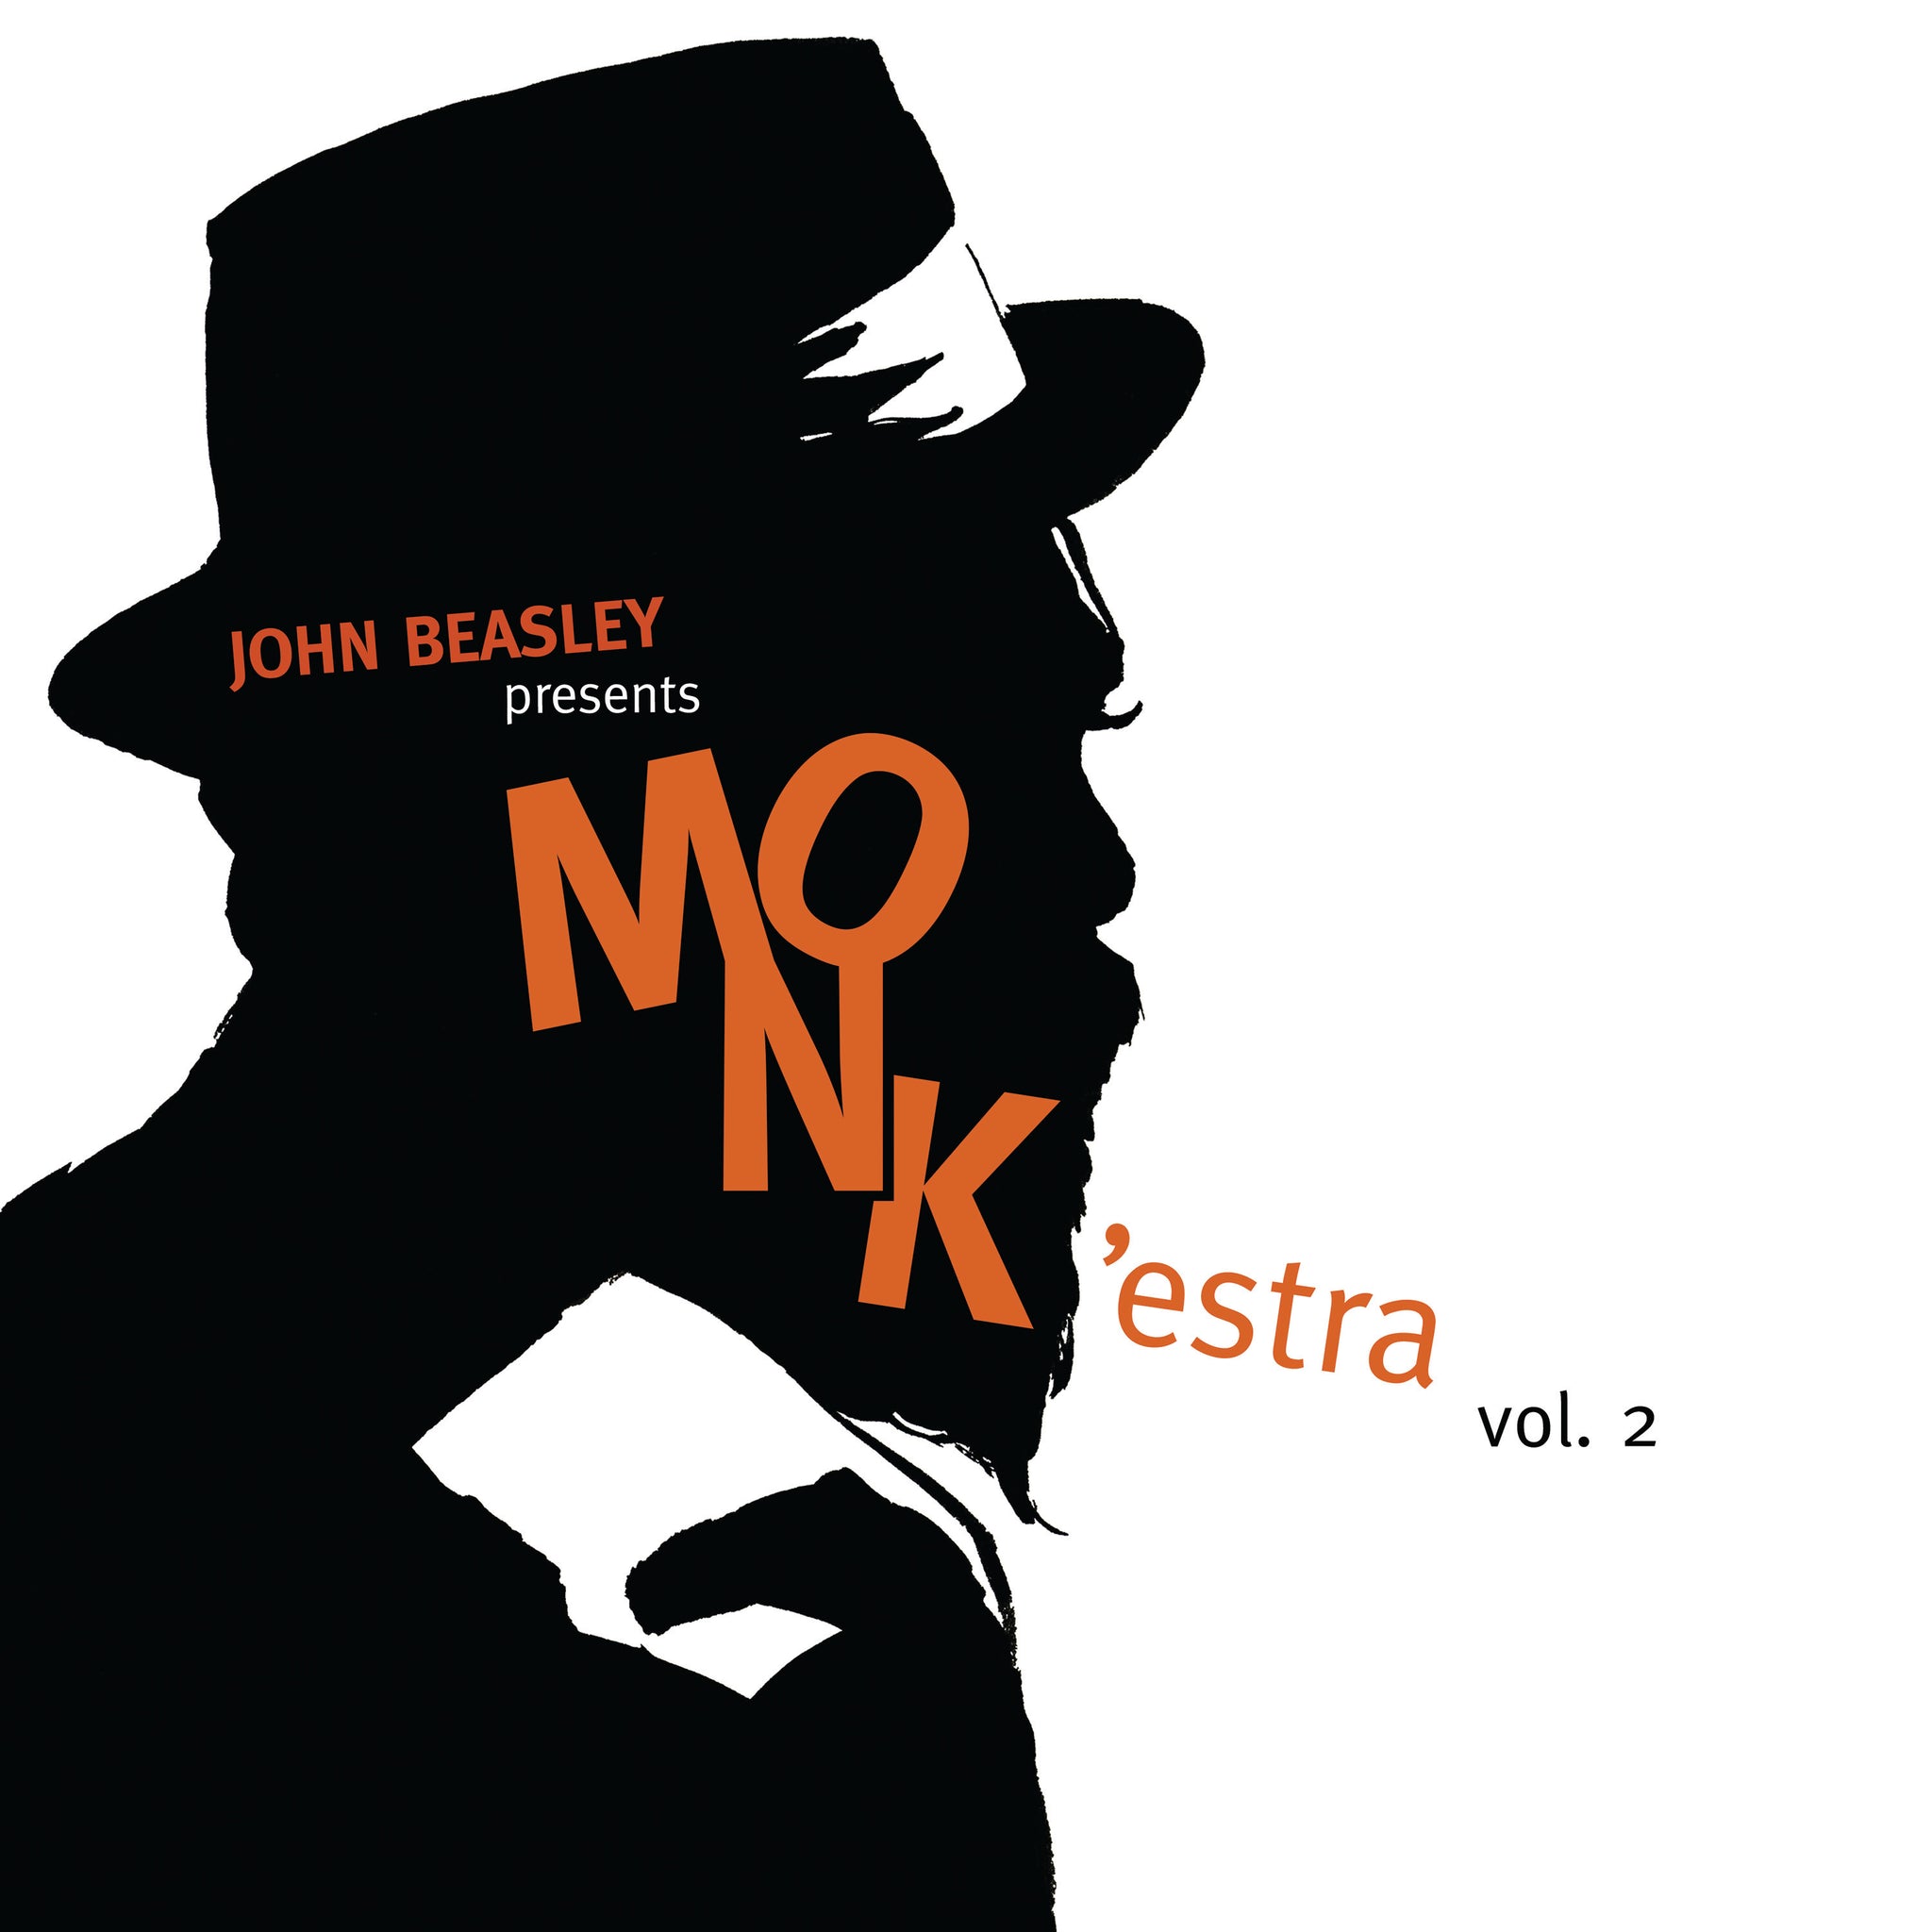 John Beasley - MONK'estra Vol. 2